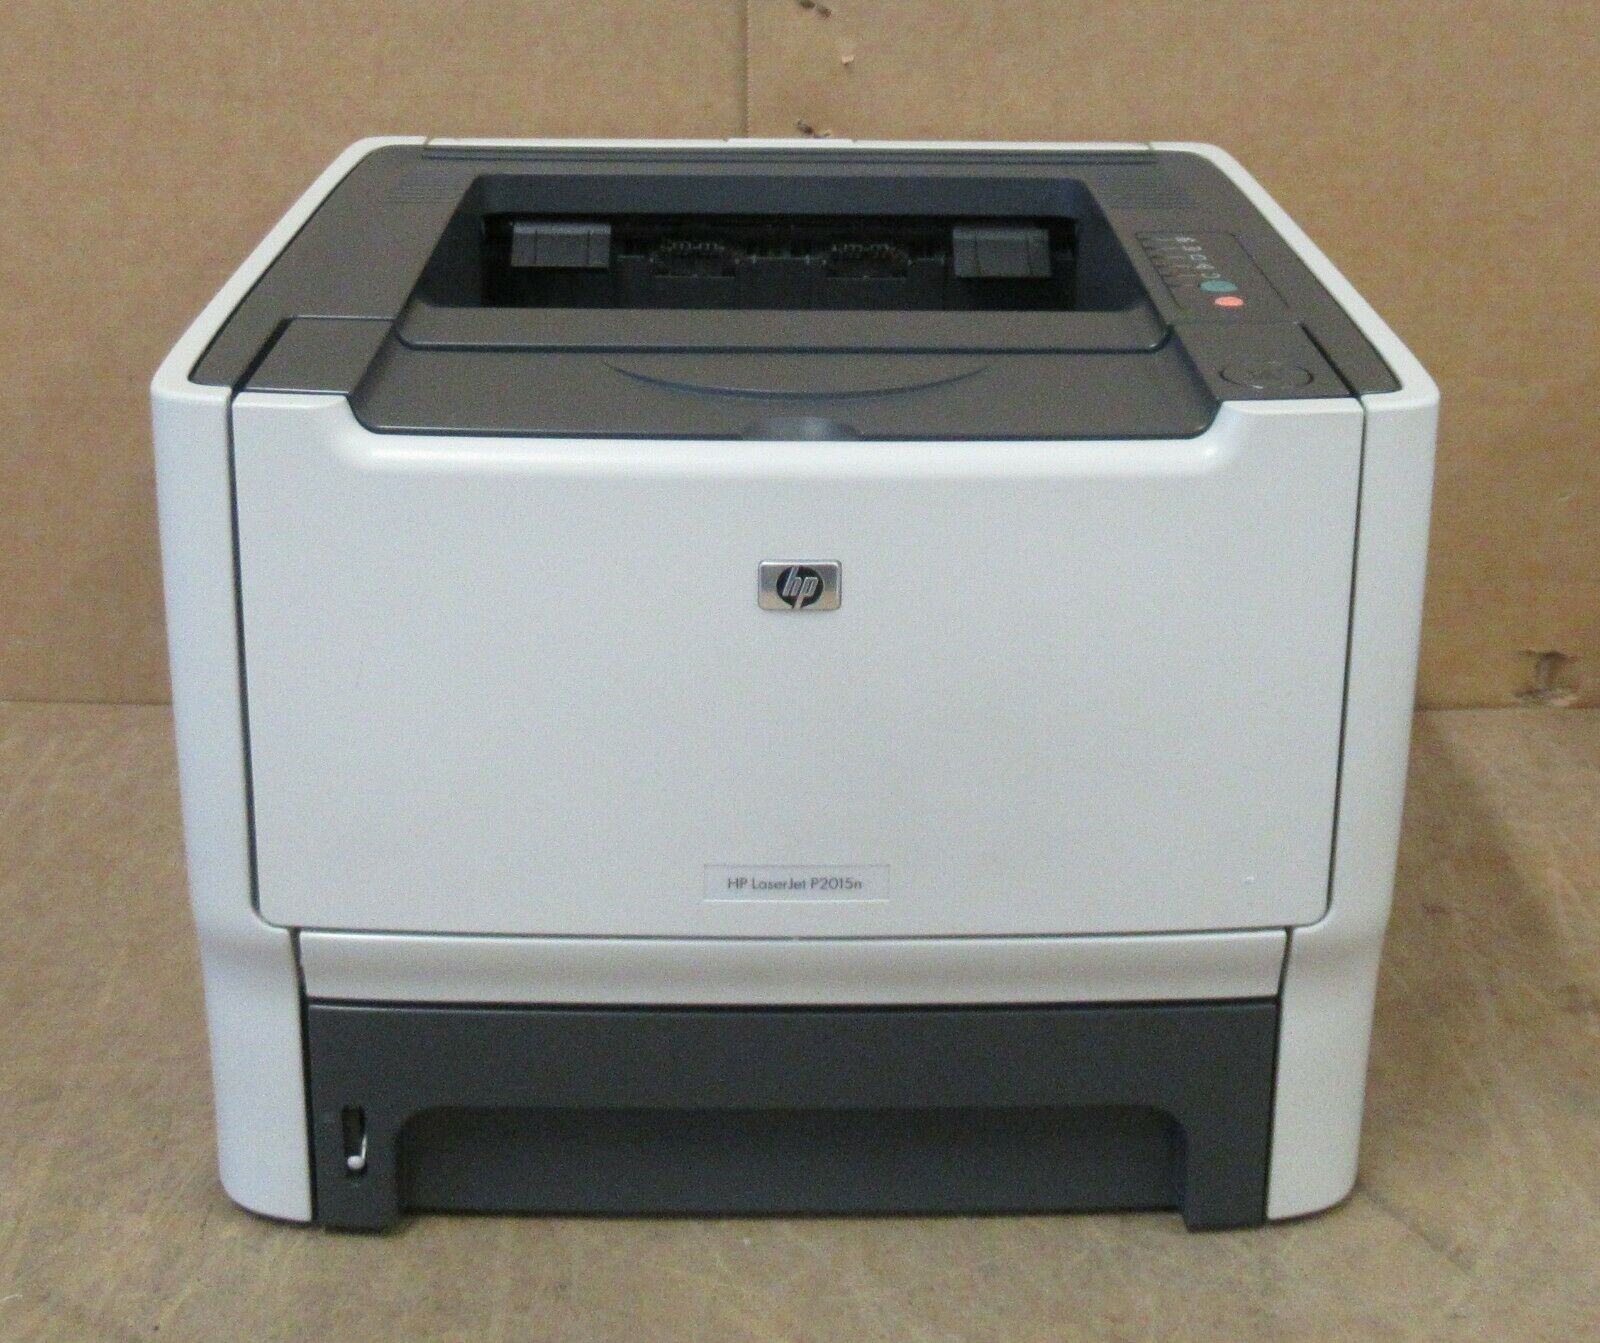 printer driver for hp laserjet 020 mac